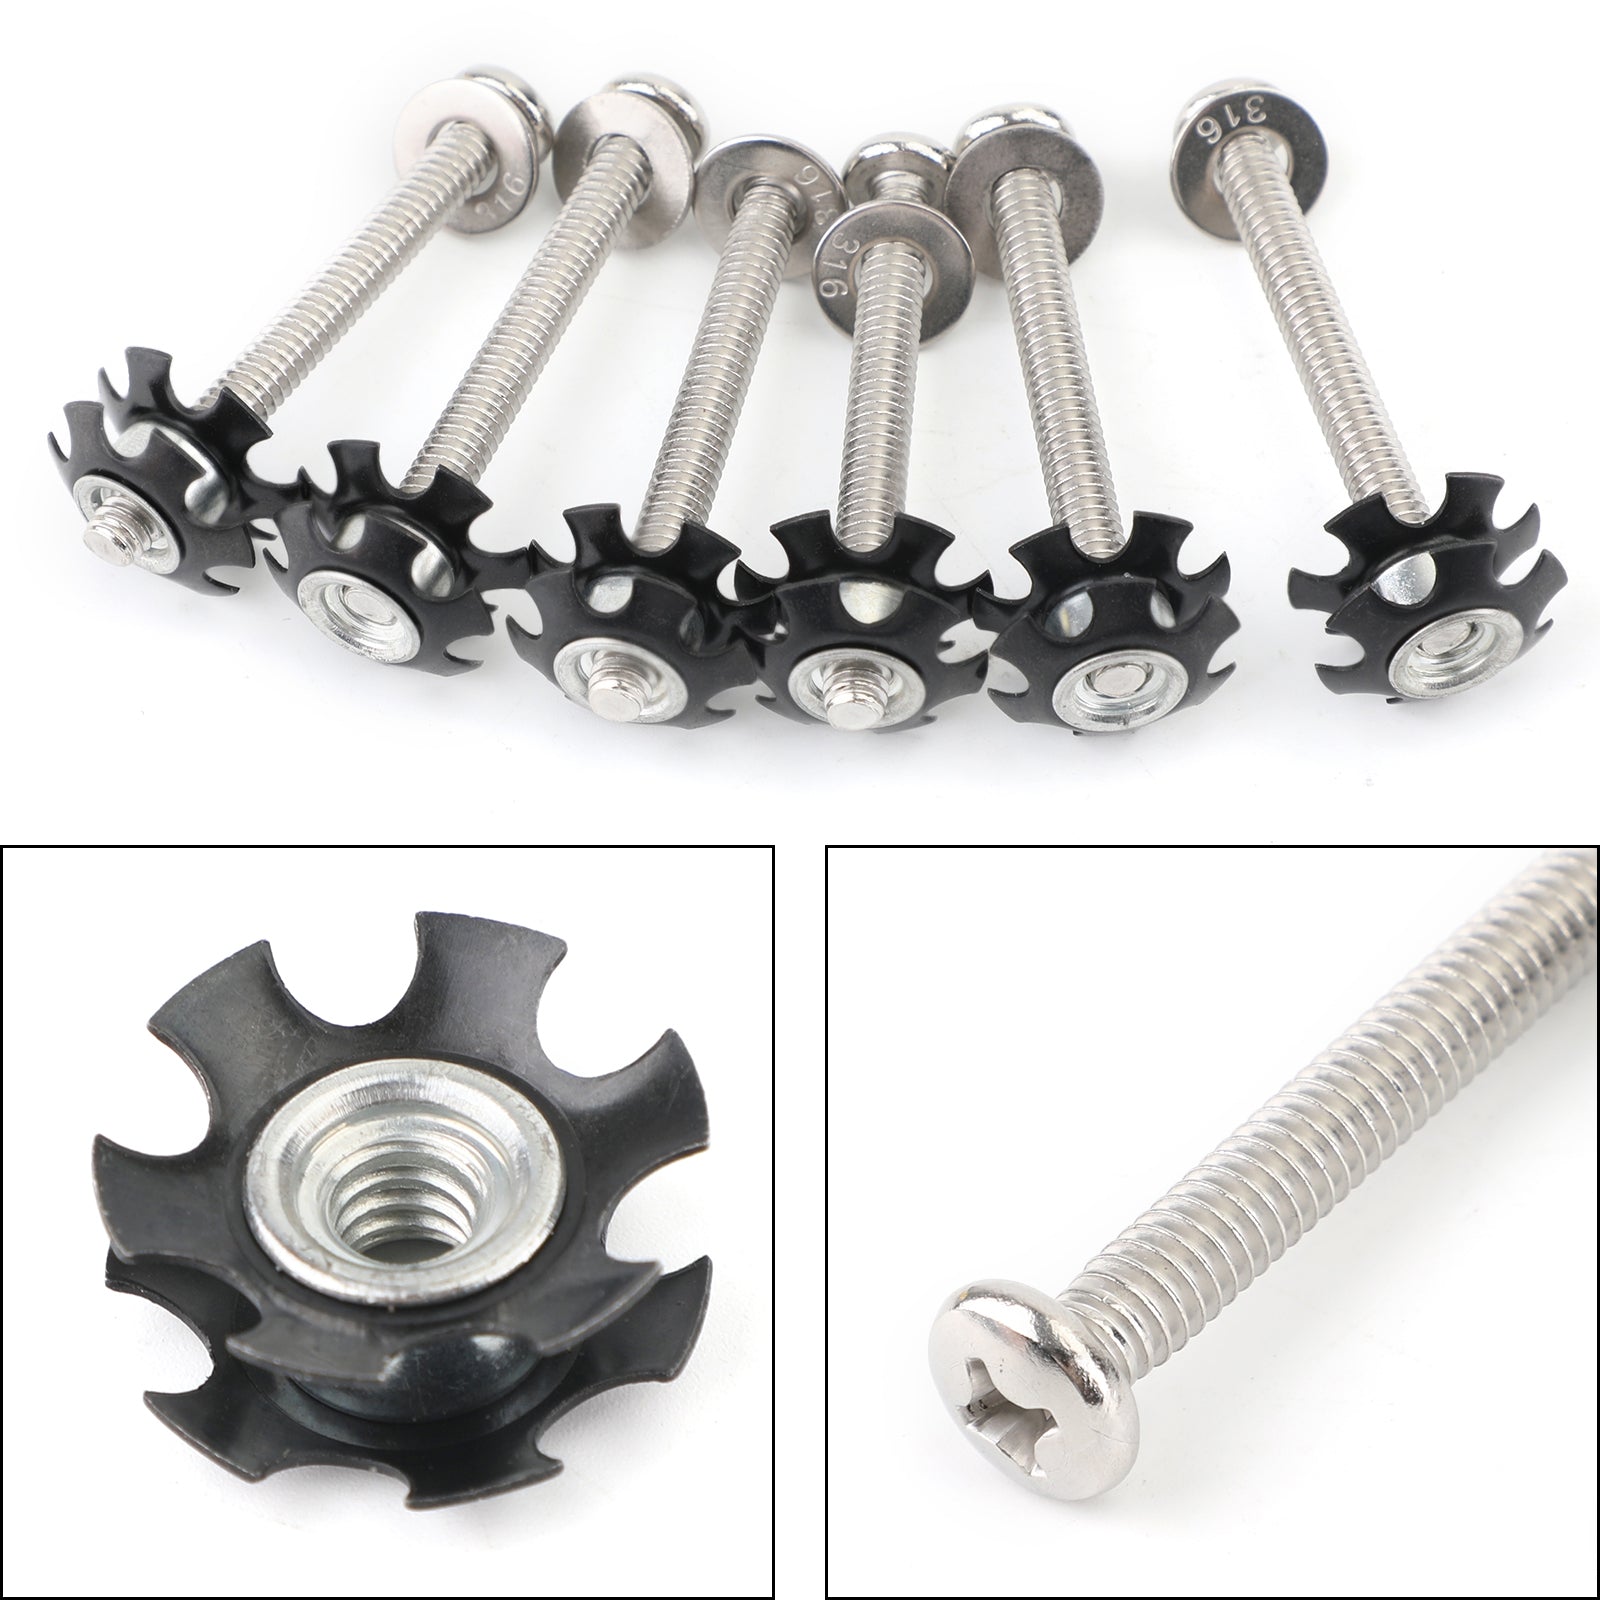 6Pcs Repair Kit Star nuts 1/4-20 screws For 1" OD tube Threadless Forks